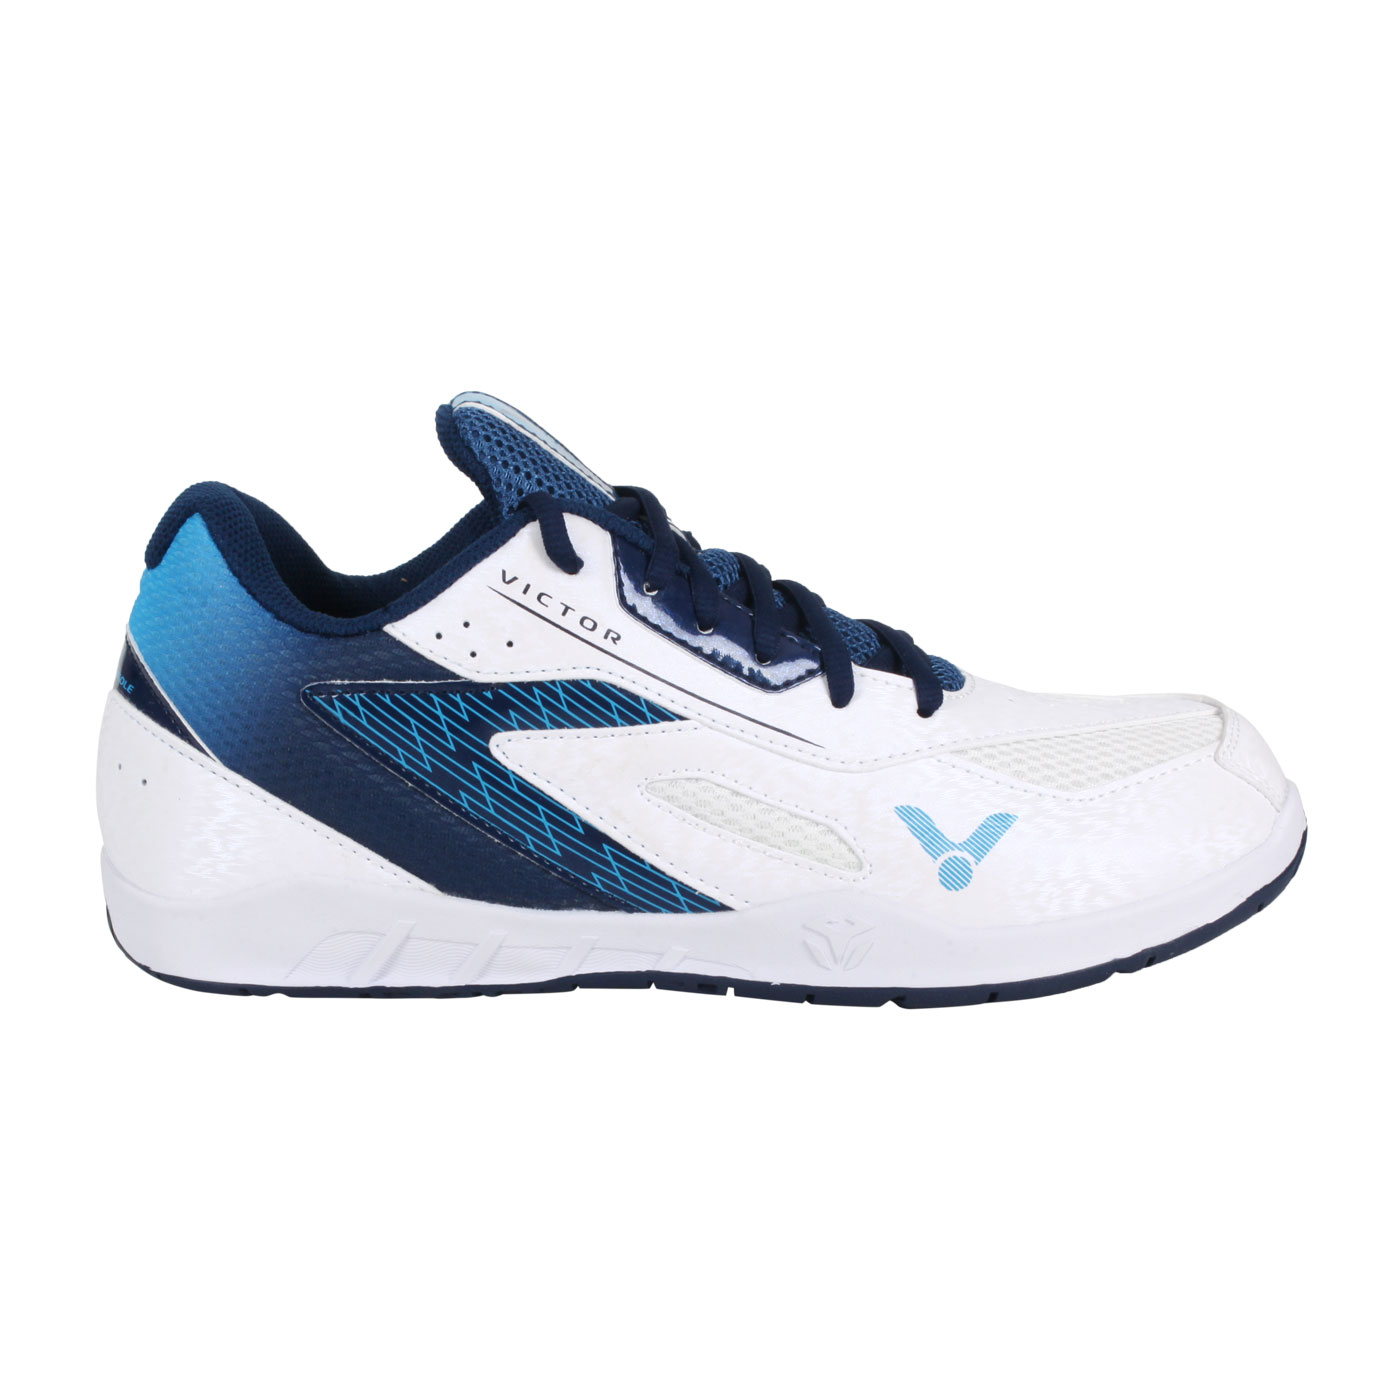 VICTOR 男款專業羽球鞋-3E VG111-AB - 珠光白深藍